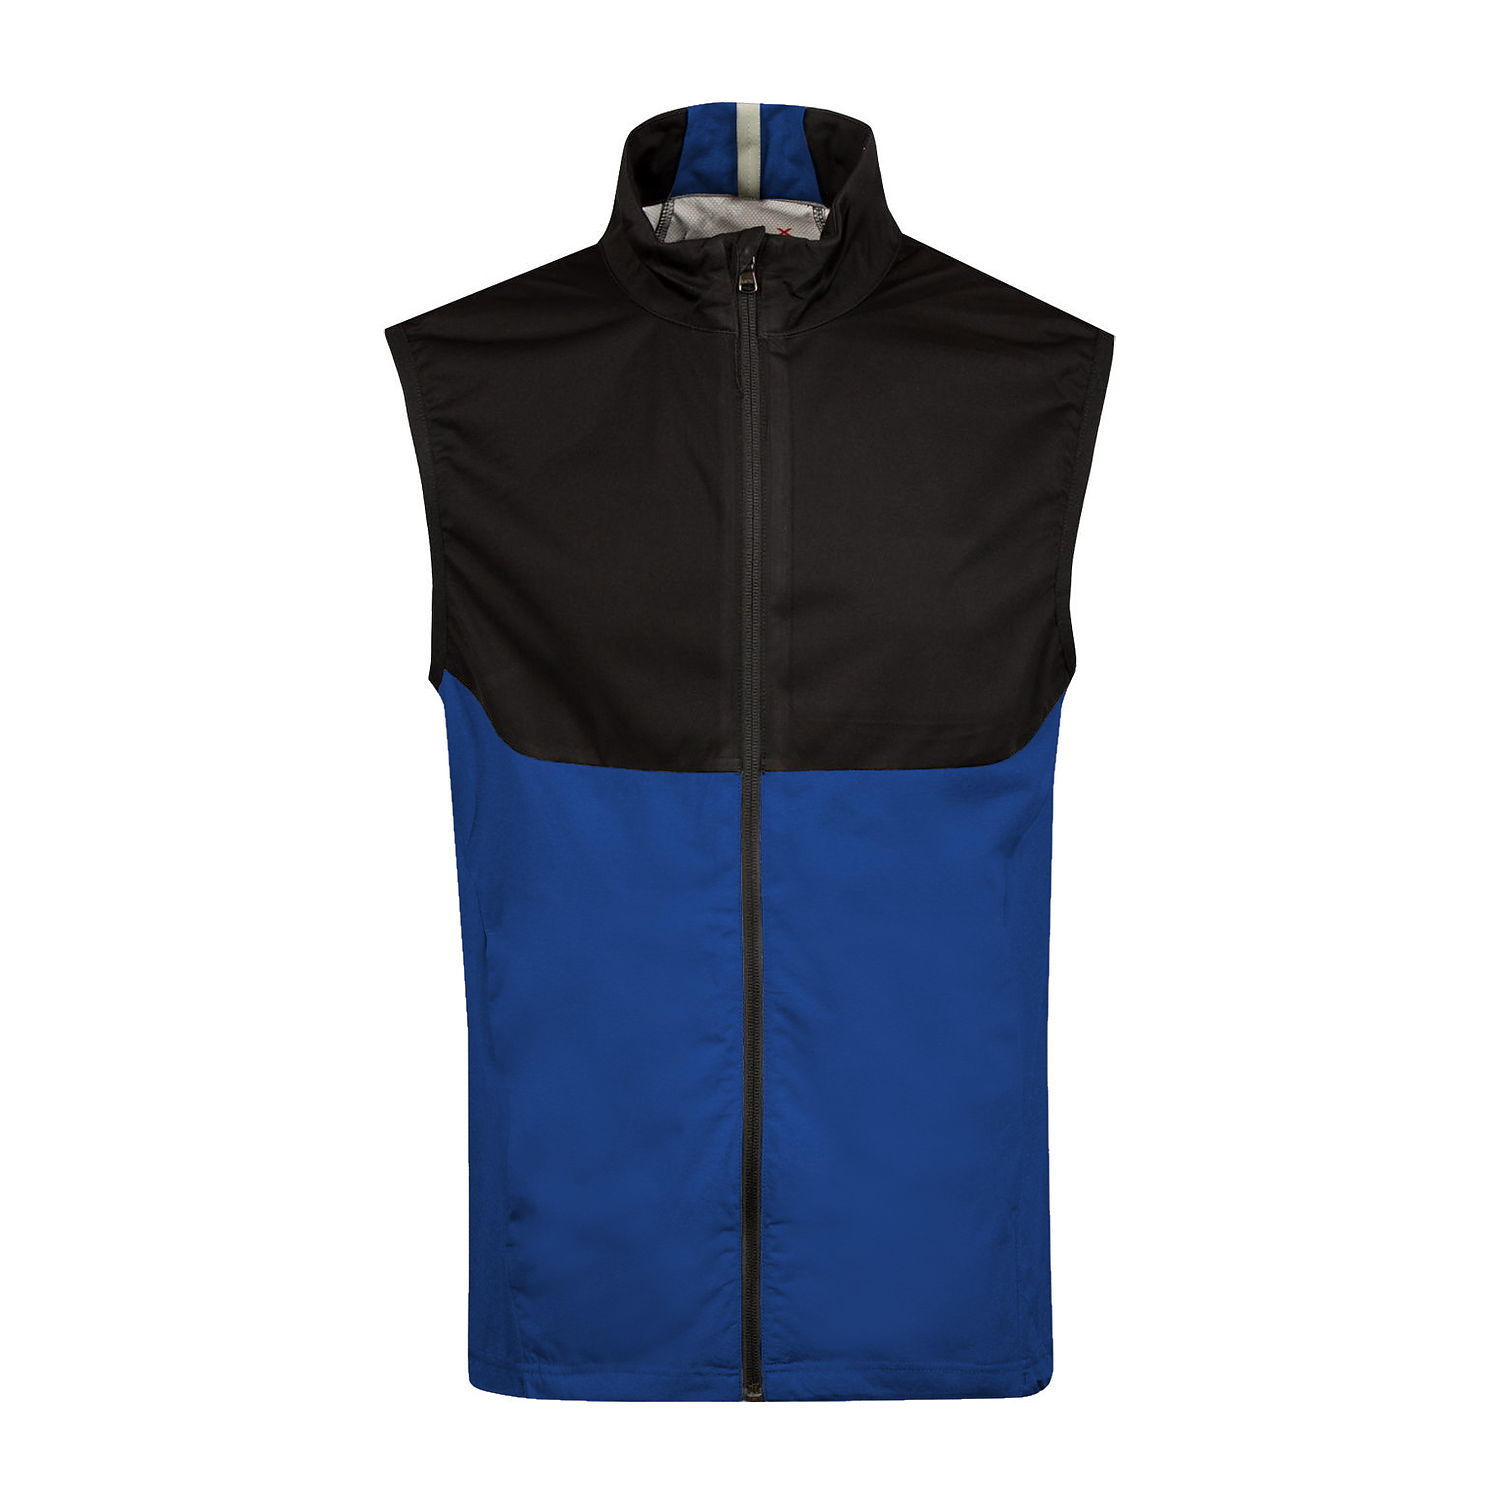 Ralph Lauren RLX Golf Ralph Lauren Mens Royal Navy/Blue Color Block Stratus Sports Vest $138